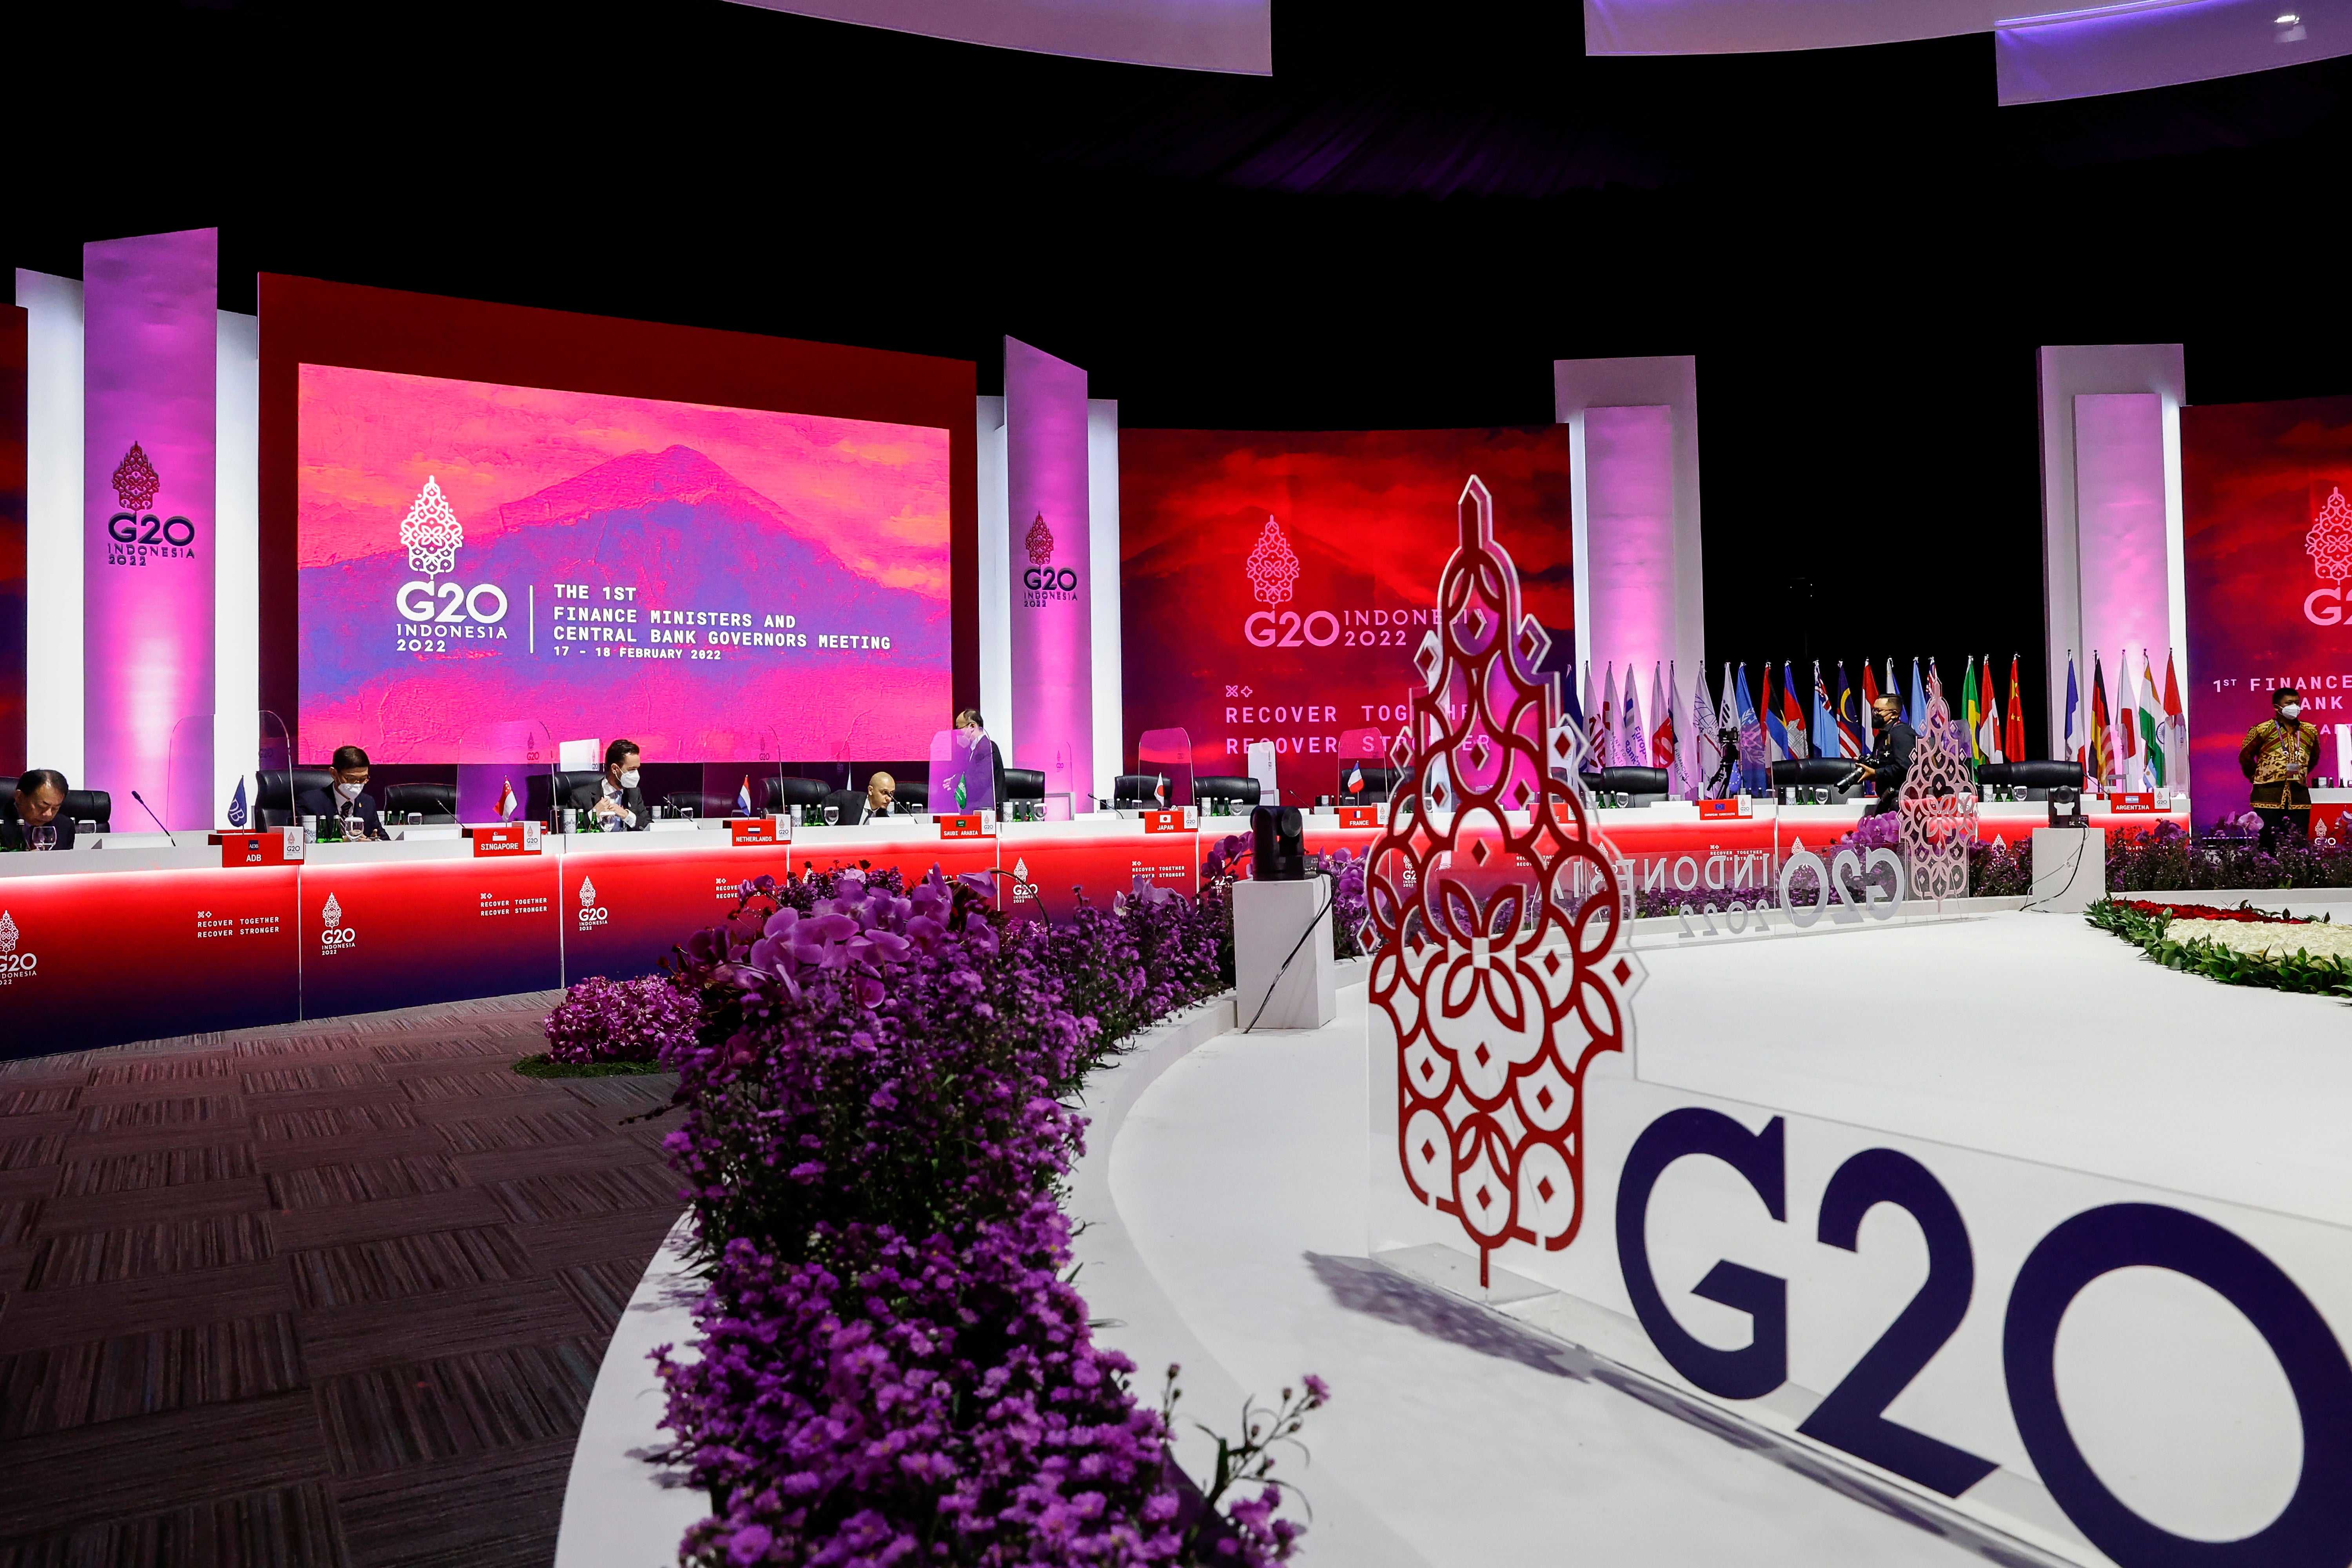 Indonesia G20